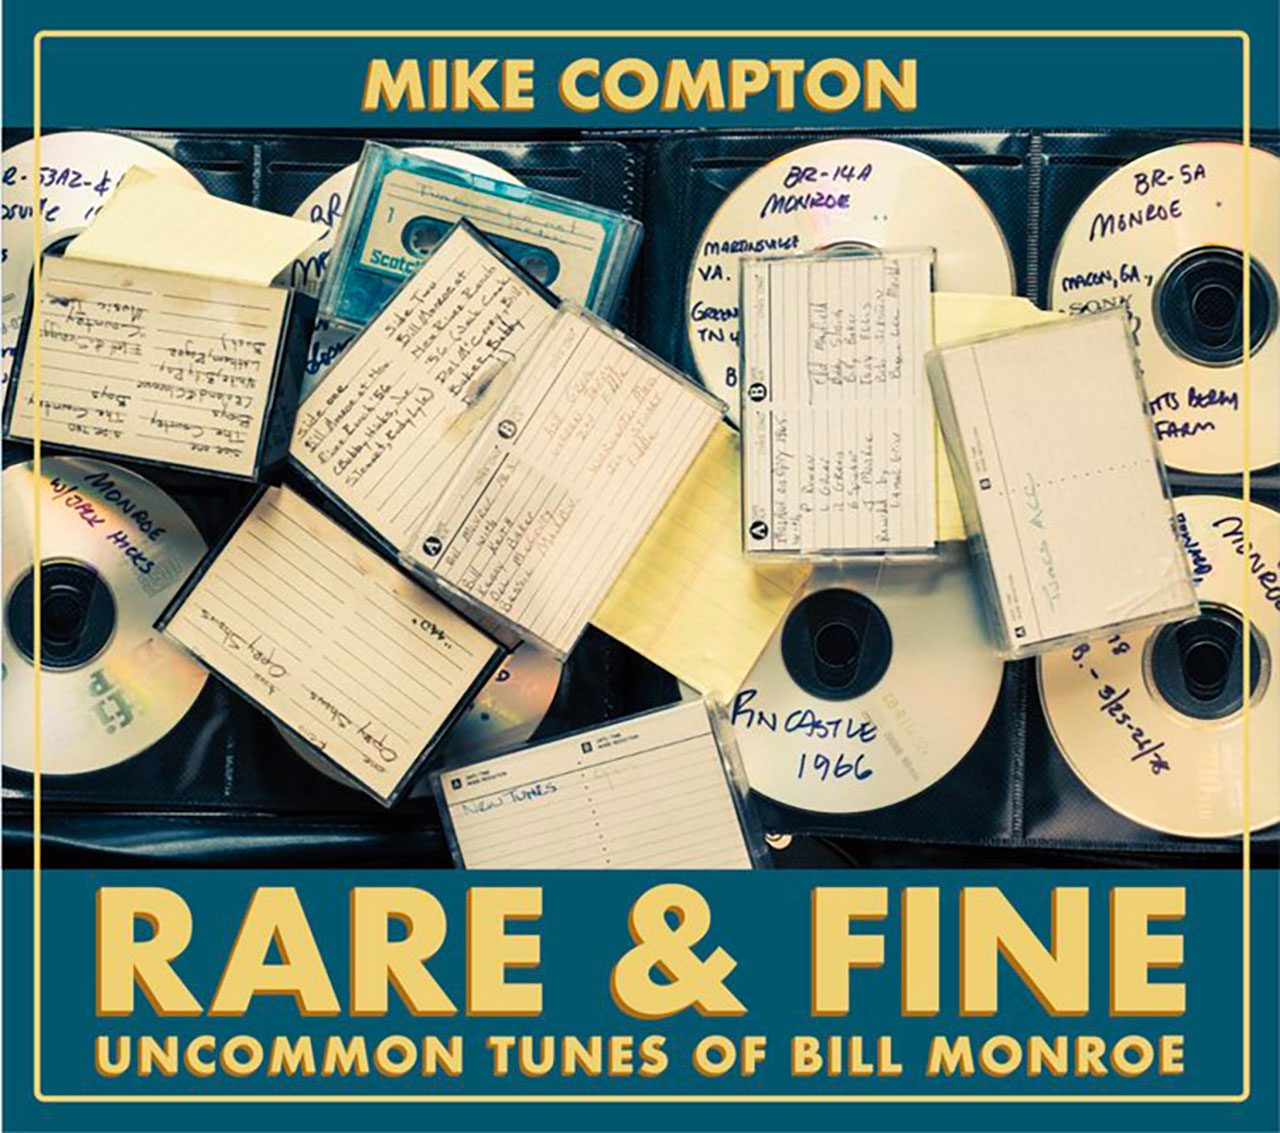 MIKE COMPTON RARE AN FINE cover album